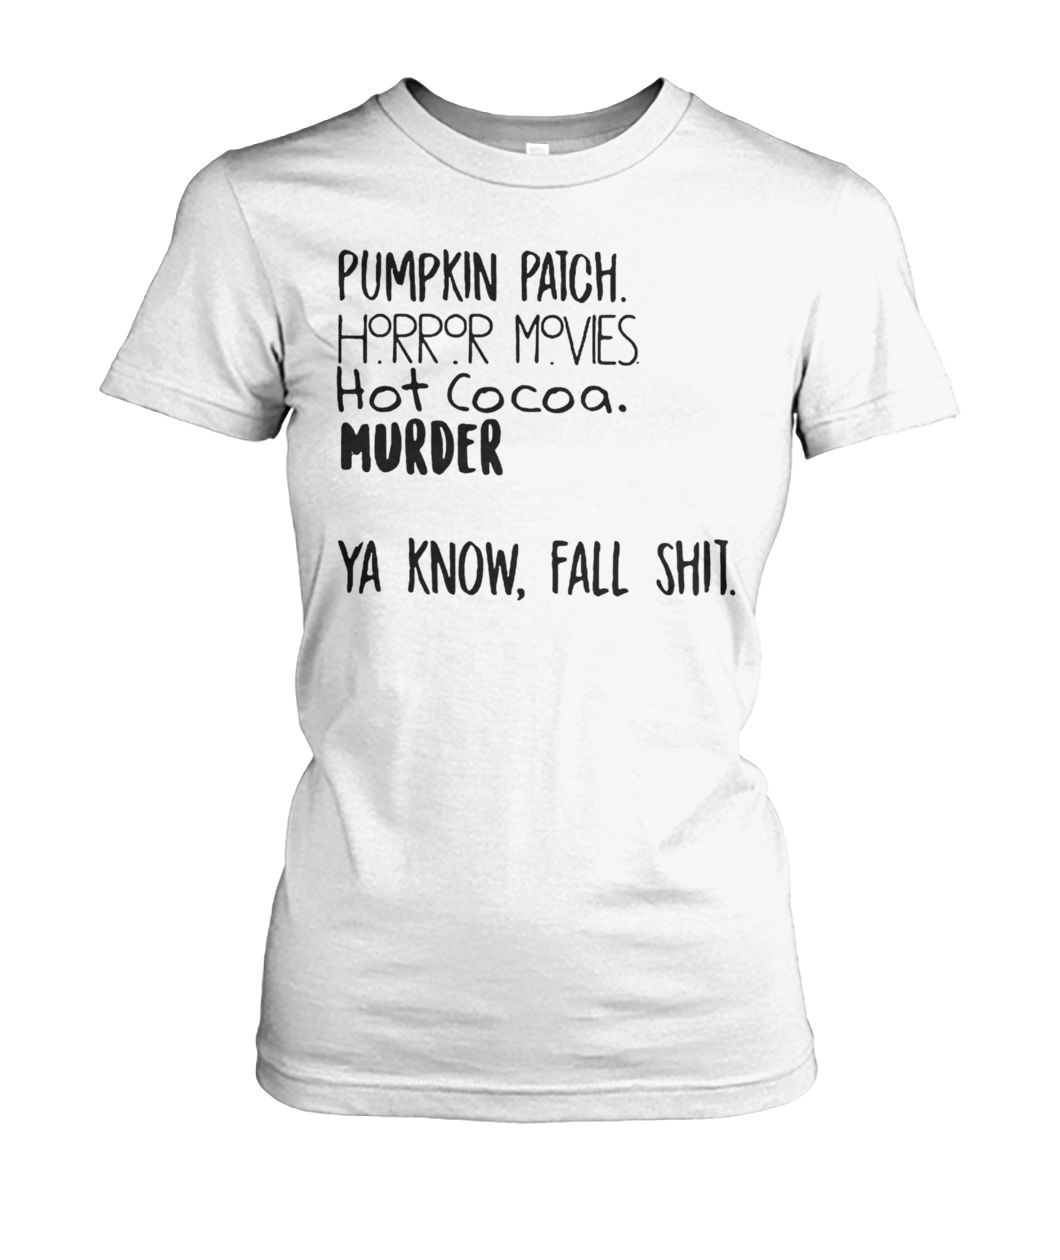 Pumpkin patch horror movies hot cocoa murder ya know fall shit women's crew tee